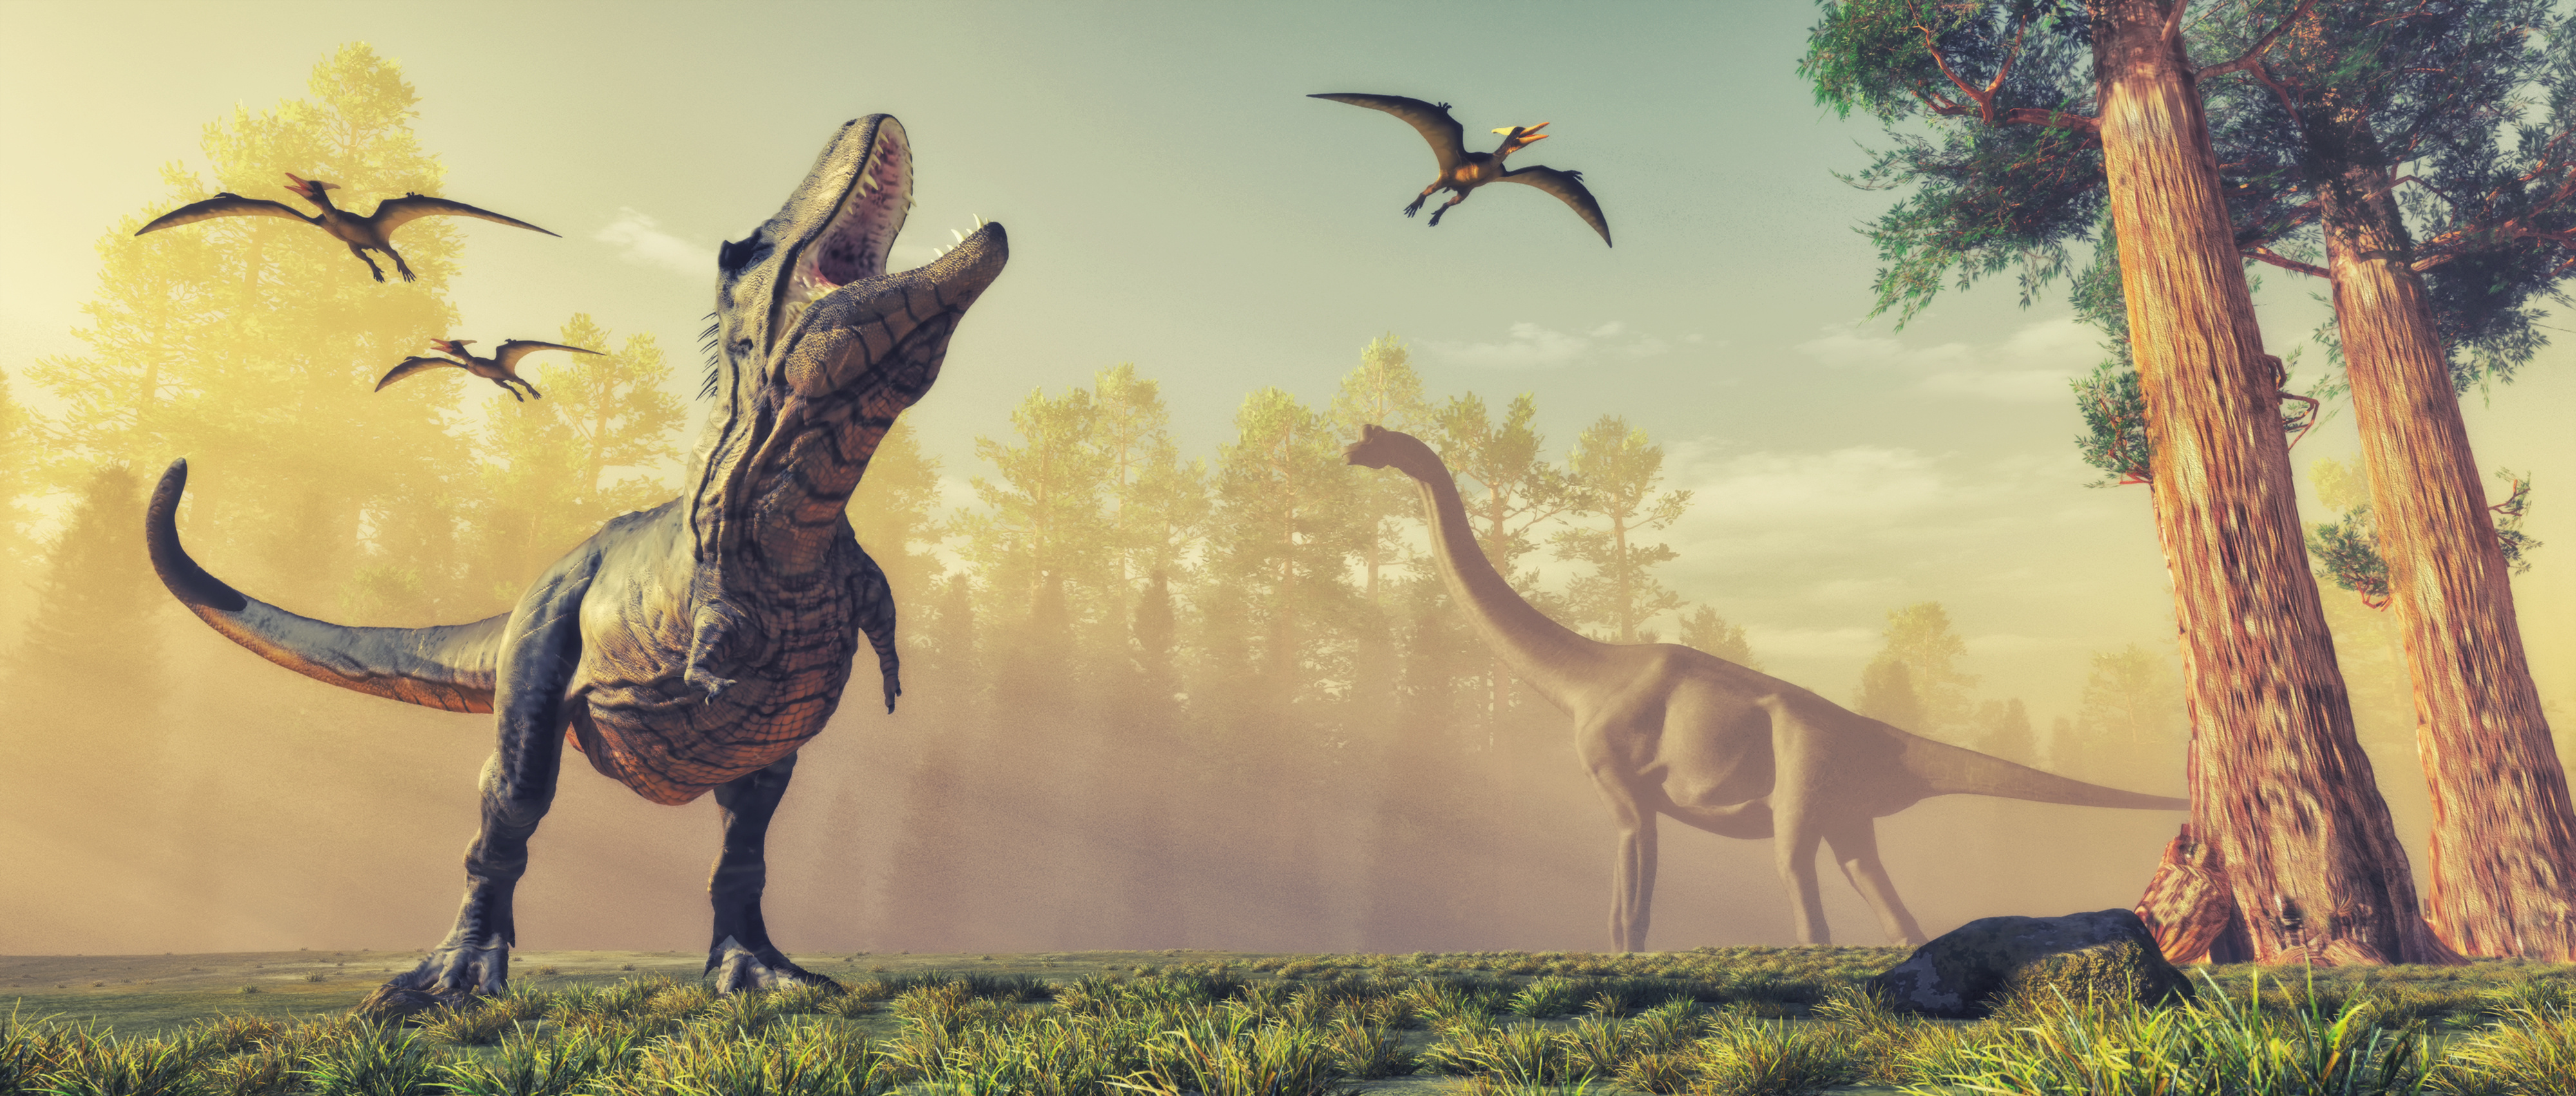 Au total, environ 1,7 milliard de Tyrannosaures aurait foulé le sol terrestre durant le Crétacé. © Orlando Florin Rosu, Adobe Stock